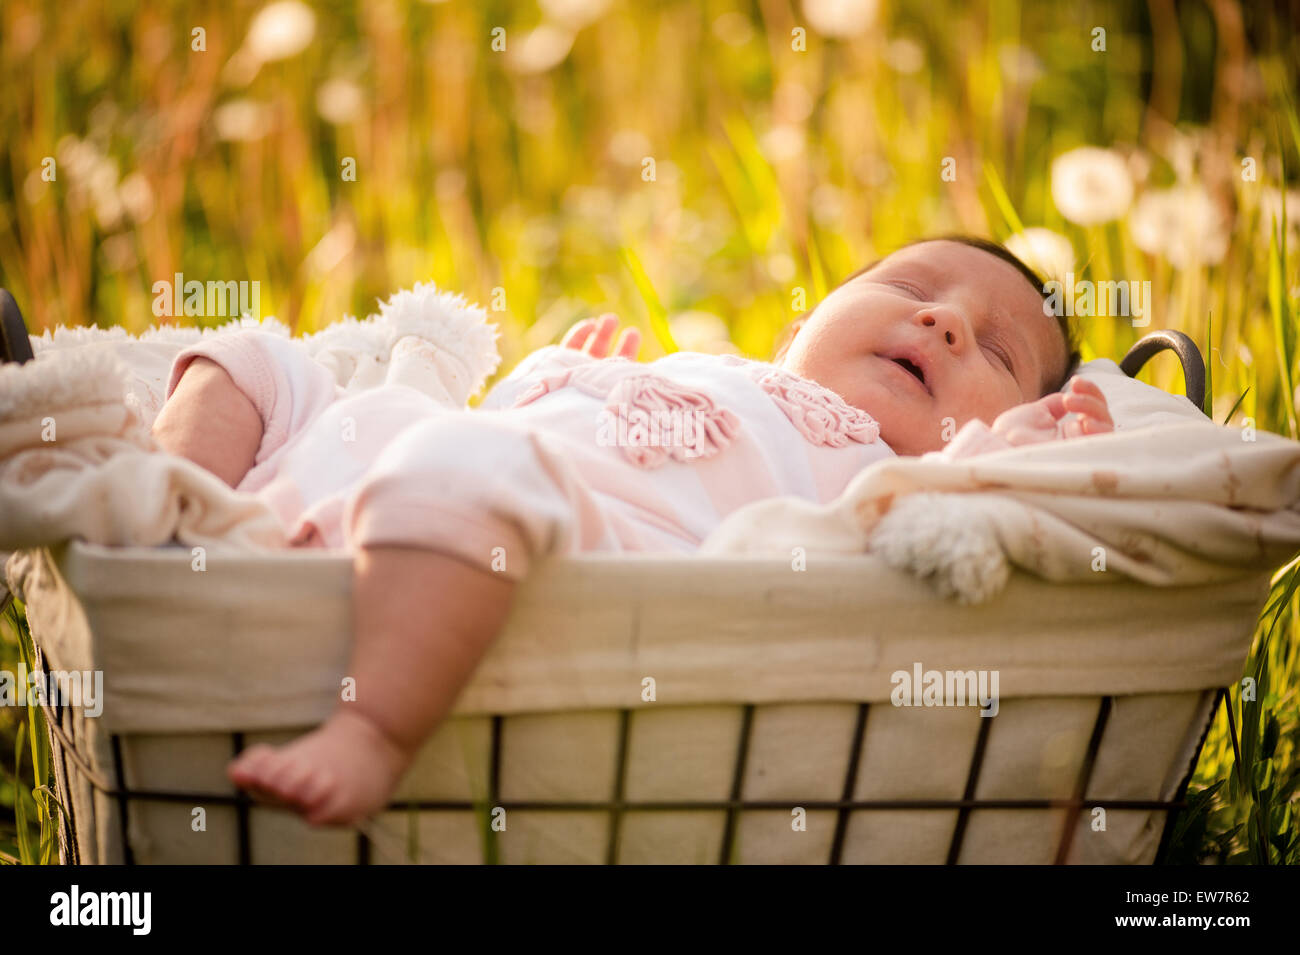 Baby girl sleeping in a basket in a crocus field Stock Photo